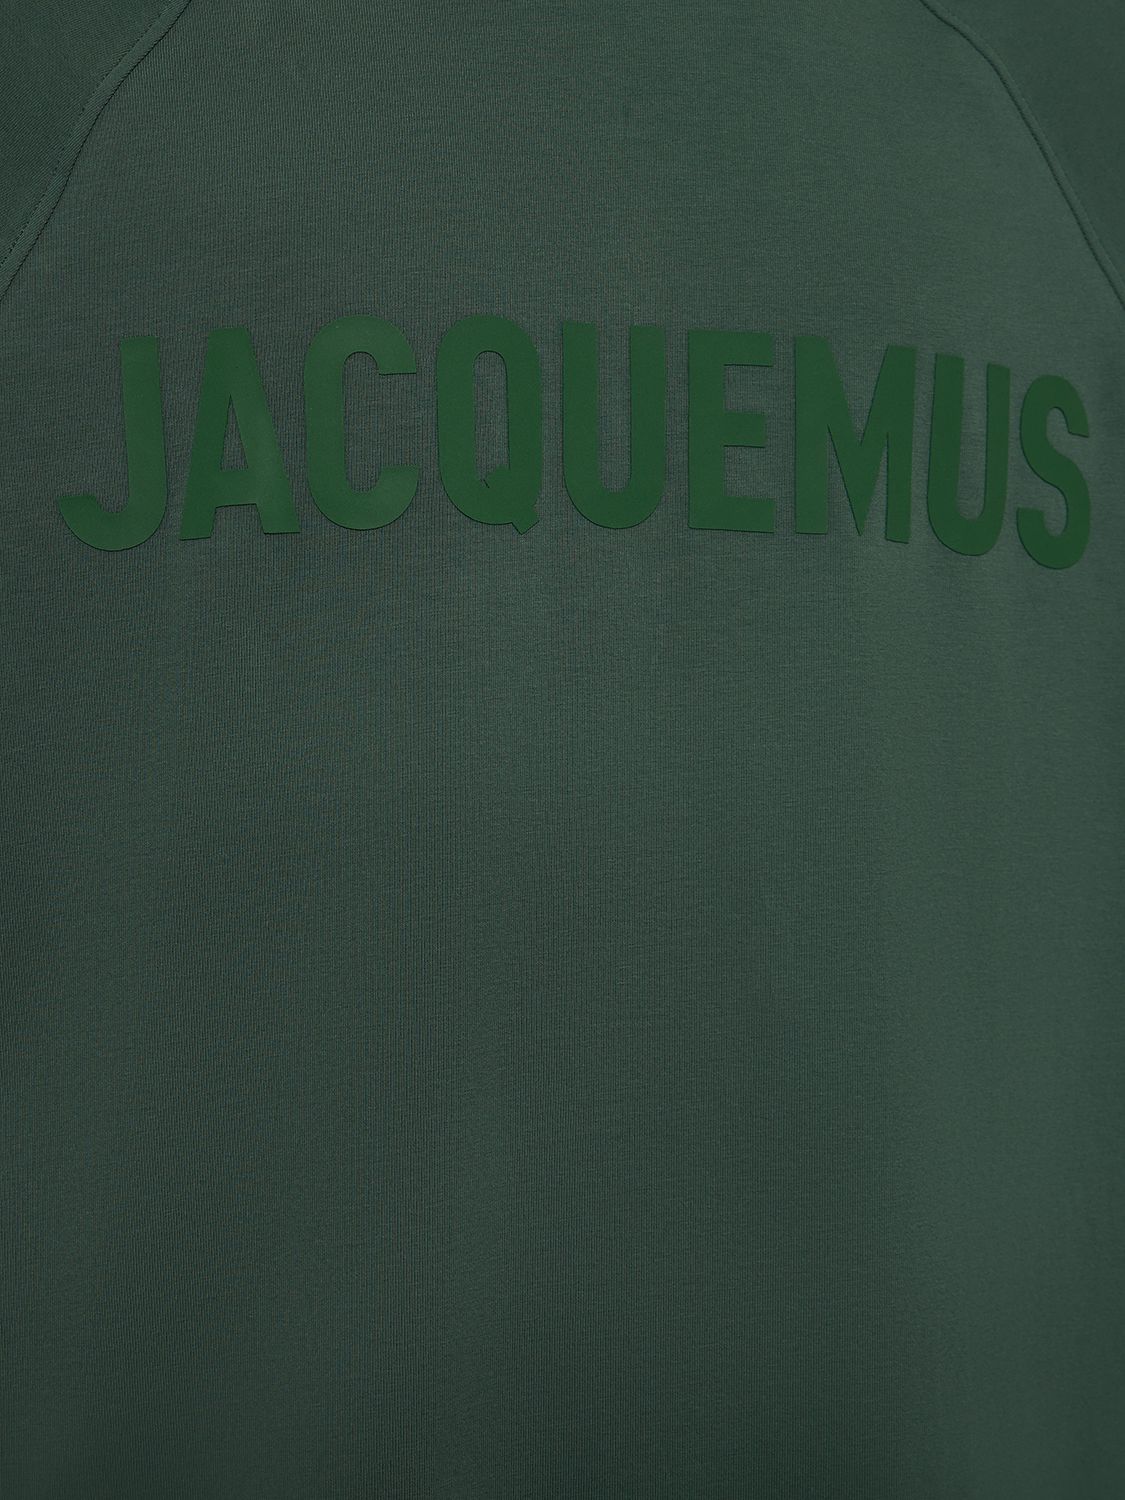 Shop Jacquemus Le Tshirt Typo Cotton T-shirt In Dark Green